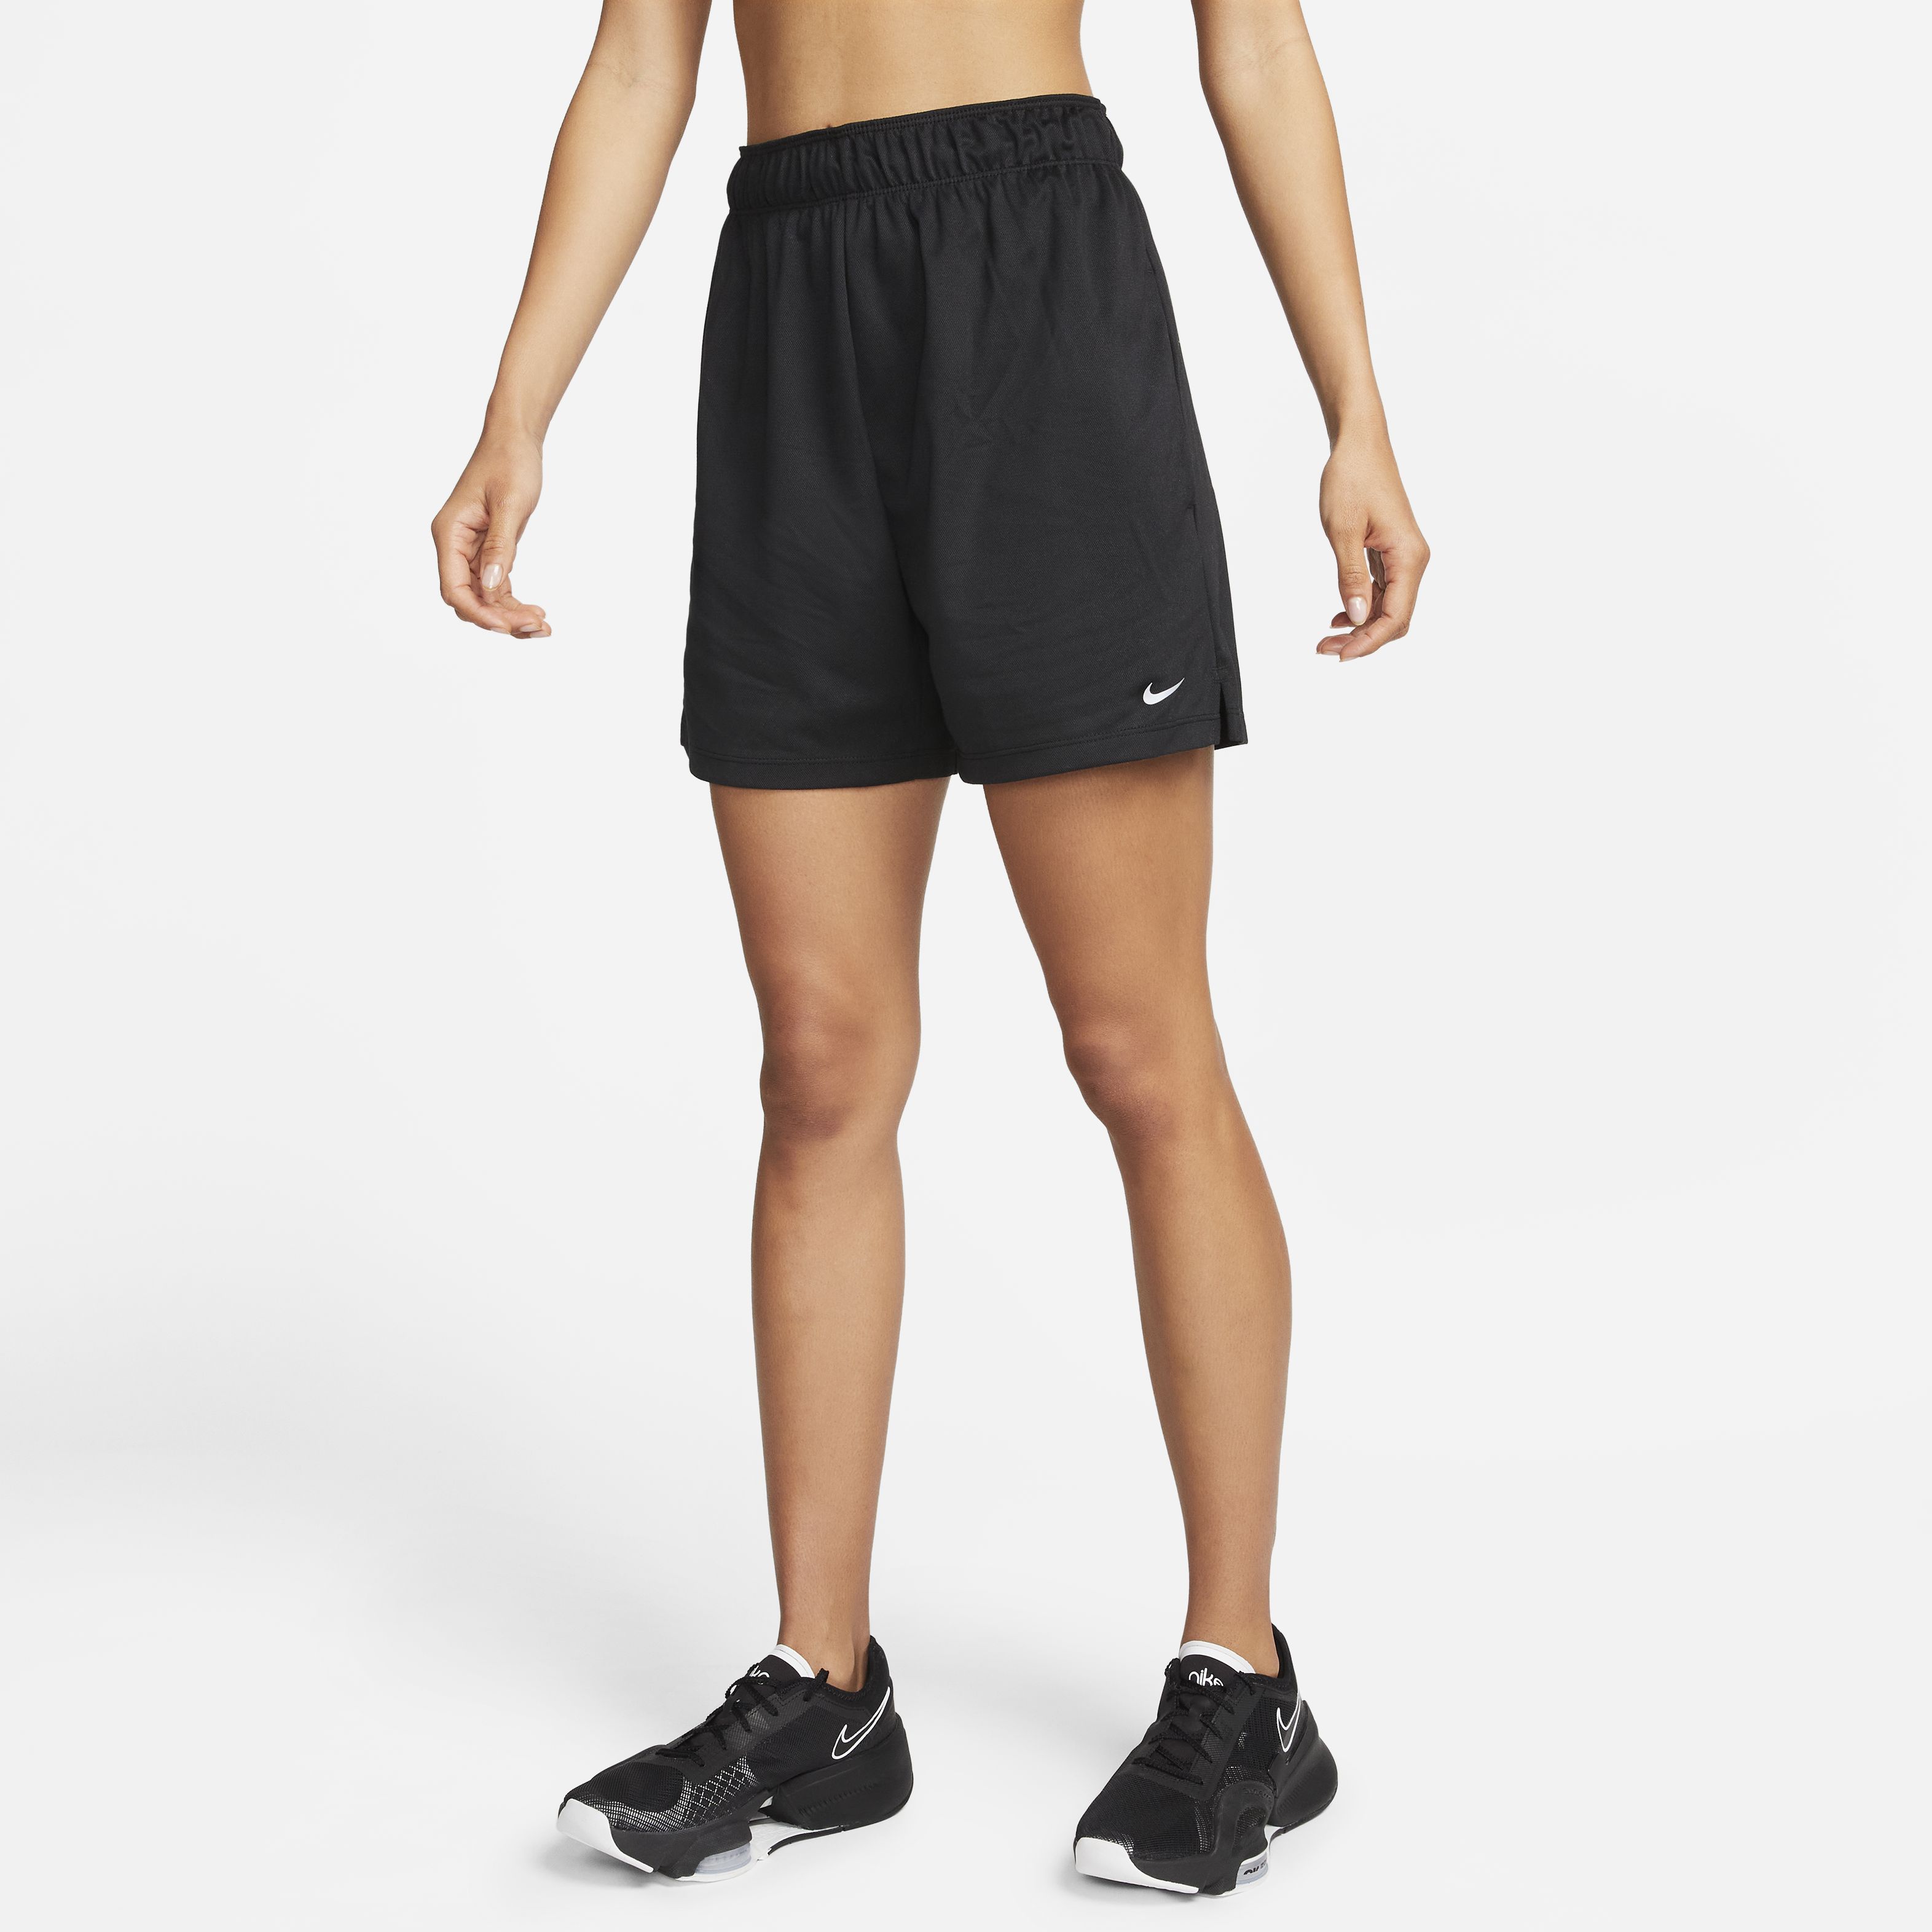 Shorts - Mujer - ropa - Nike Chile